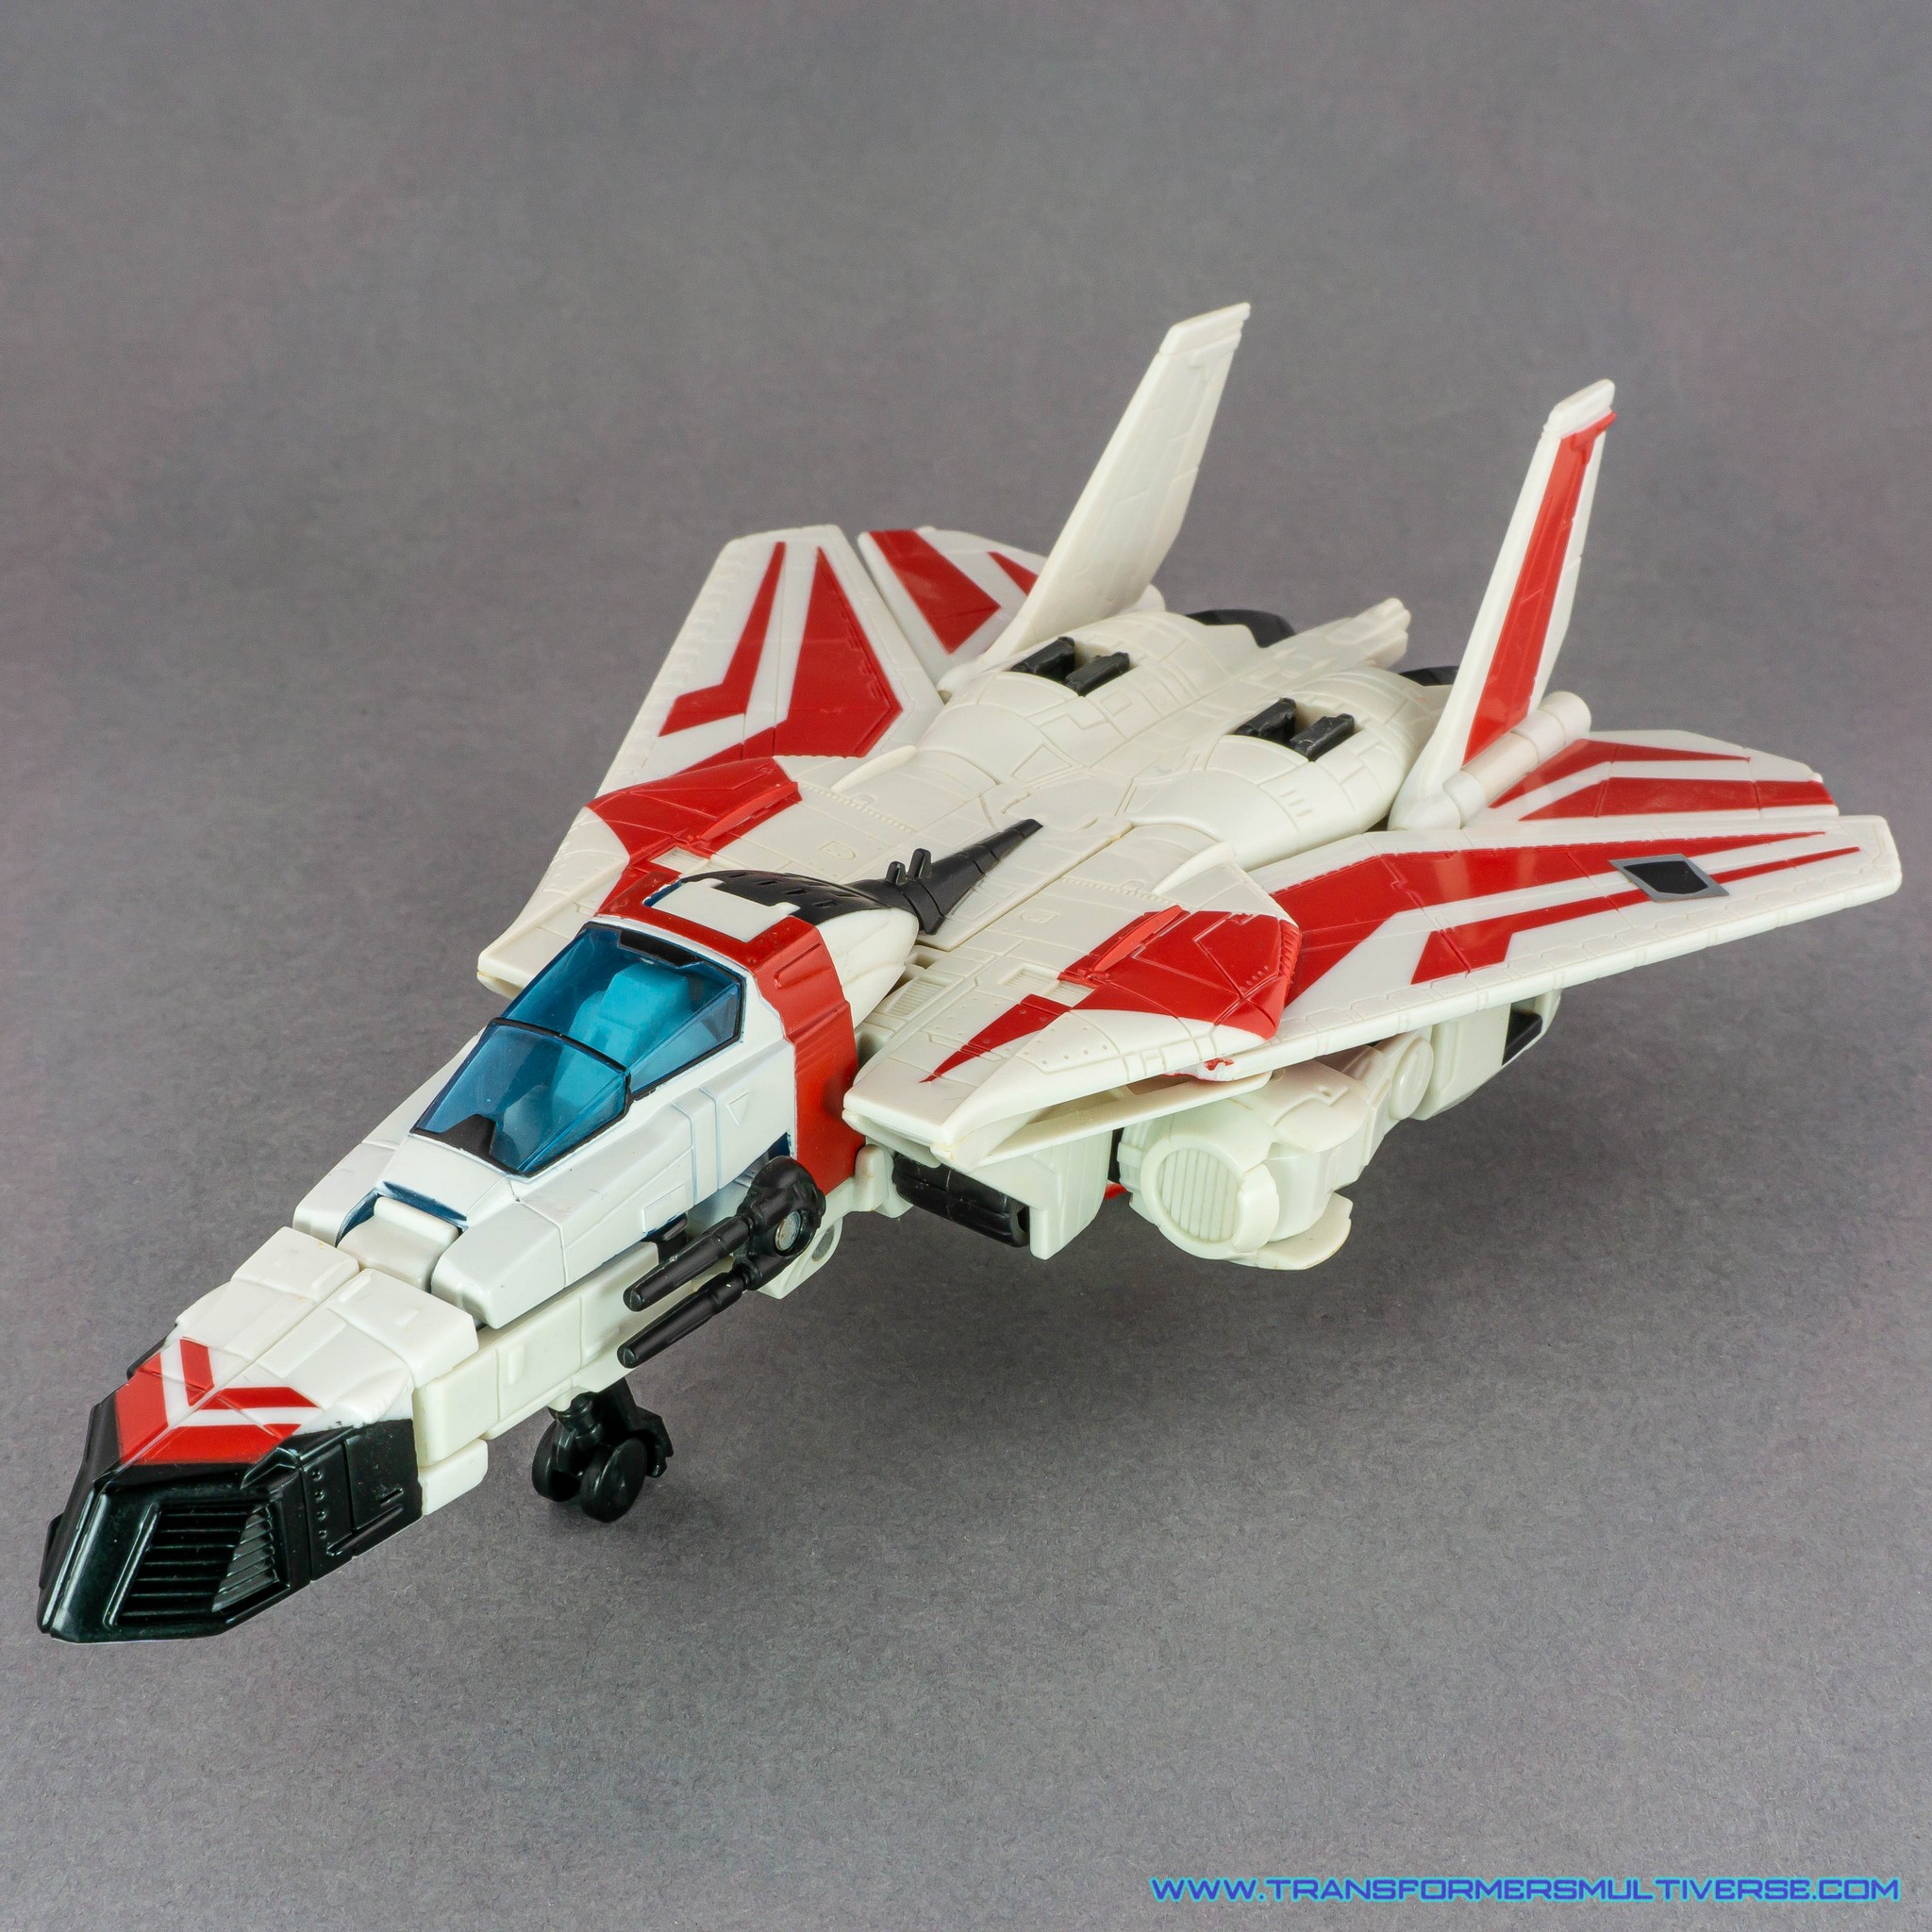 Transformers Classics Jetfire F-14 Tomcat jet fighter mode